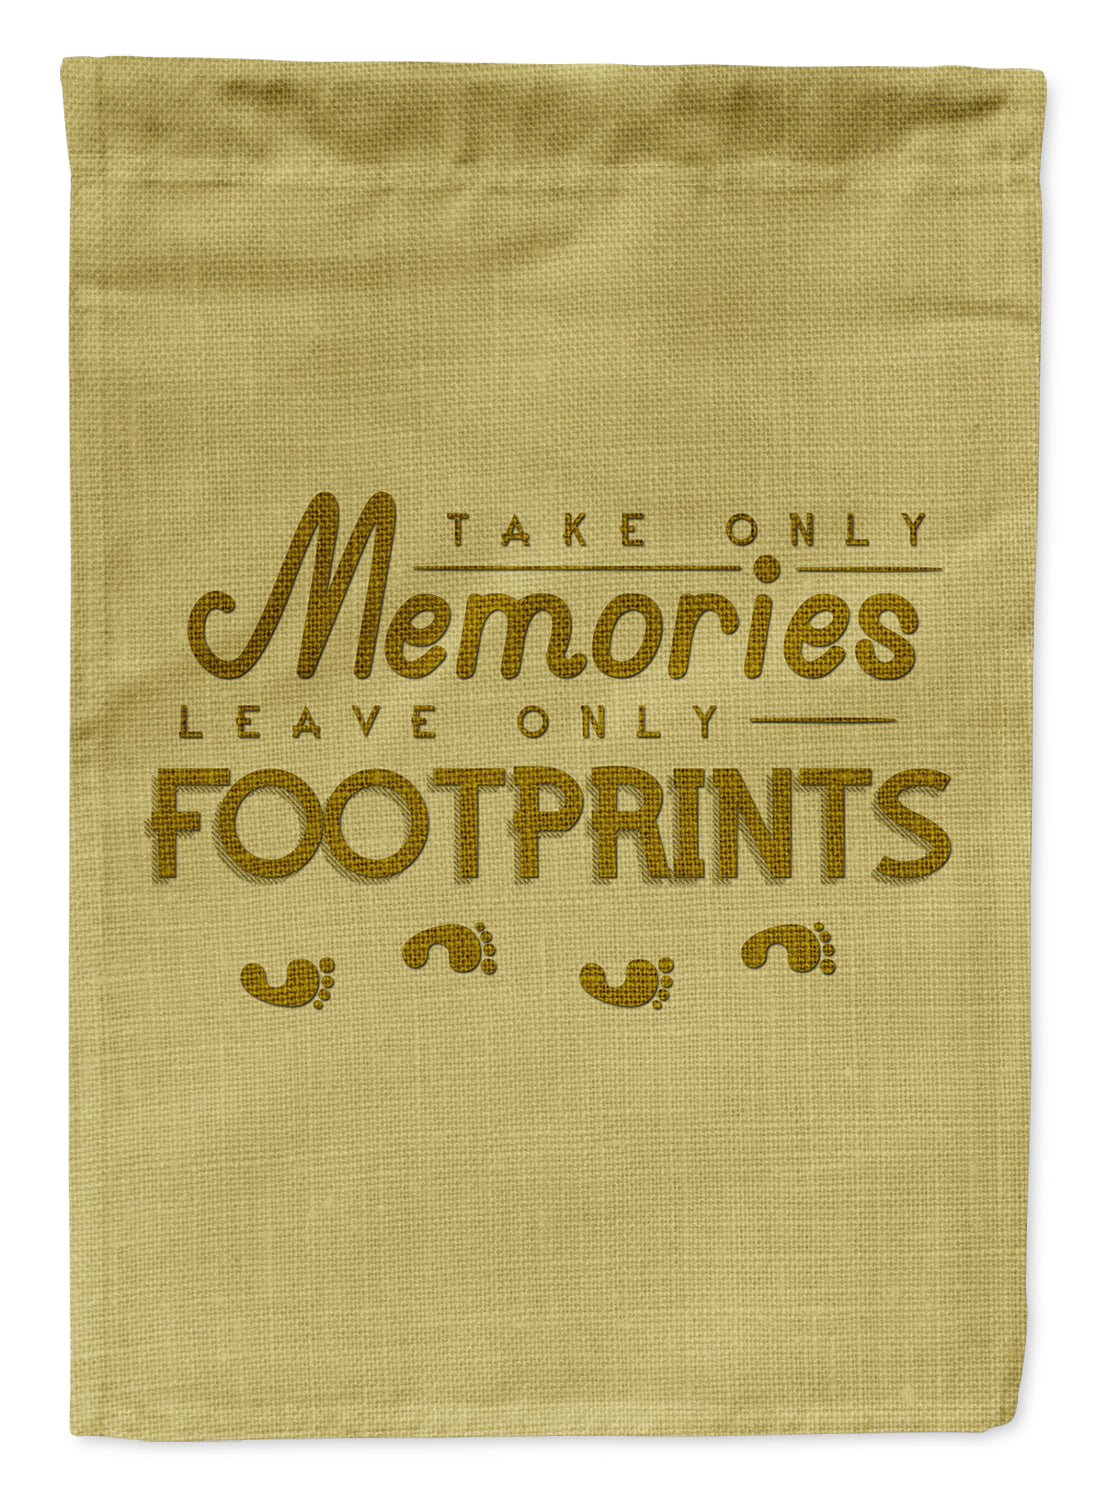 Take Memories Leave Footprints Drapeau Jardin Taille BB5464GF